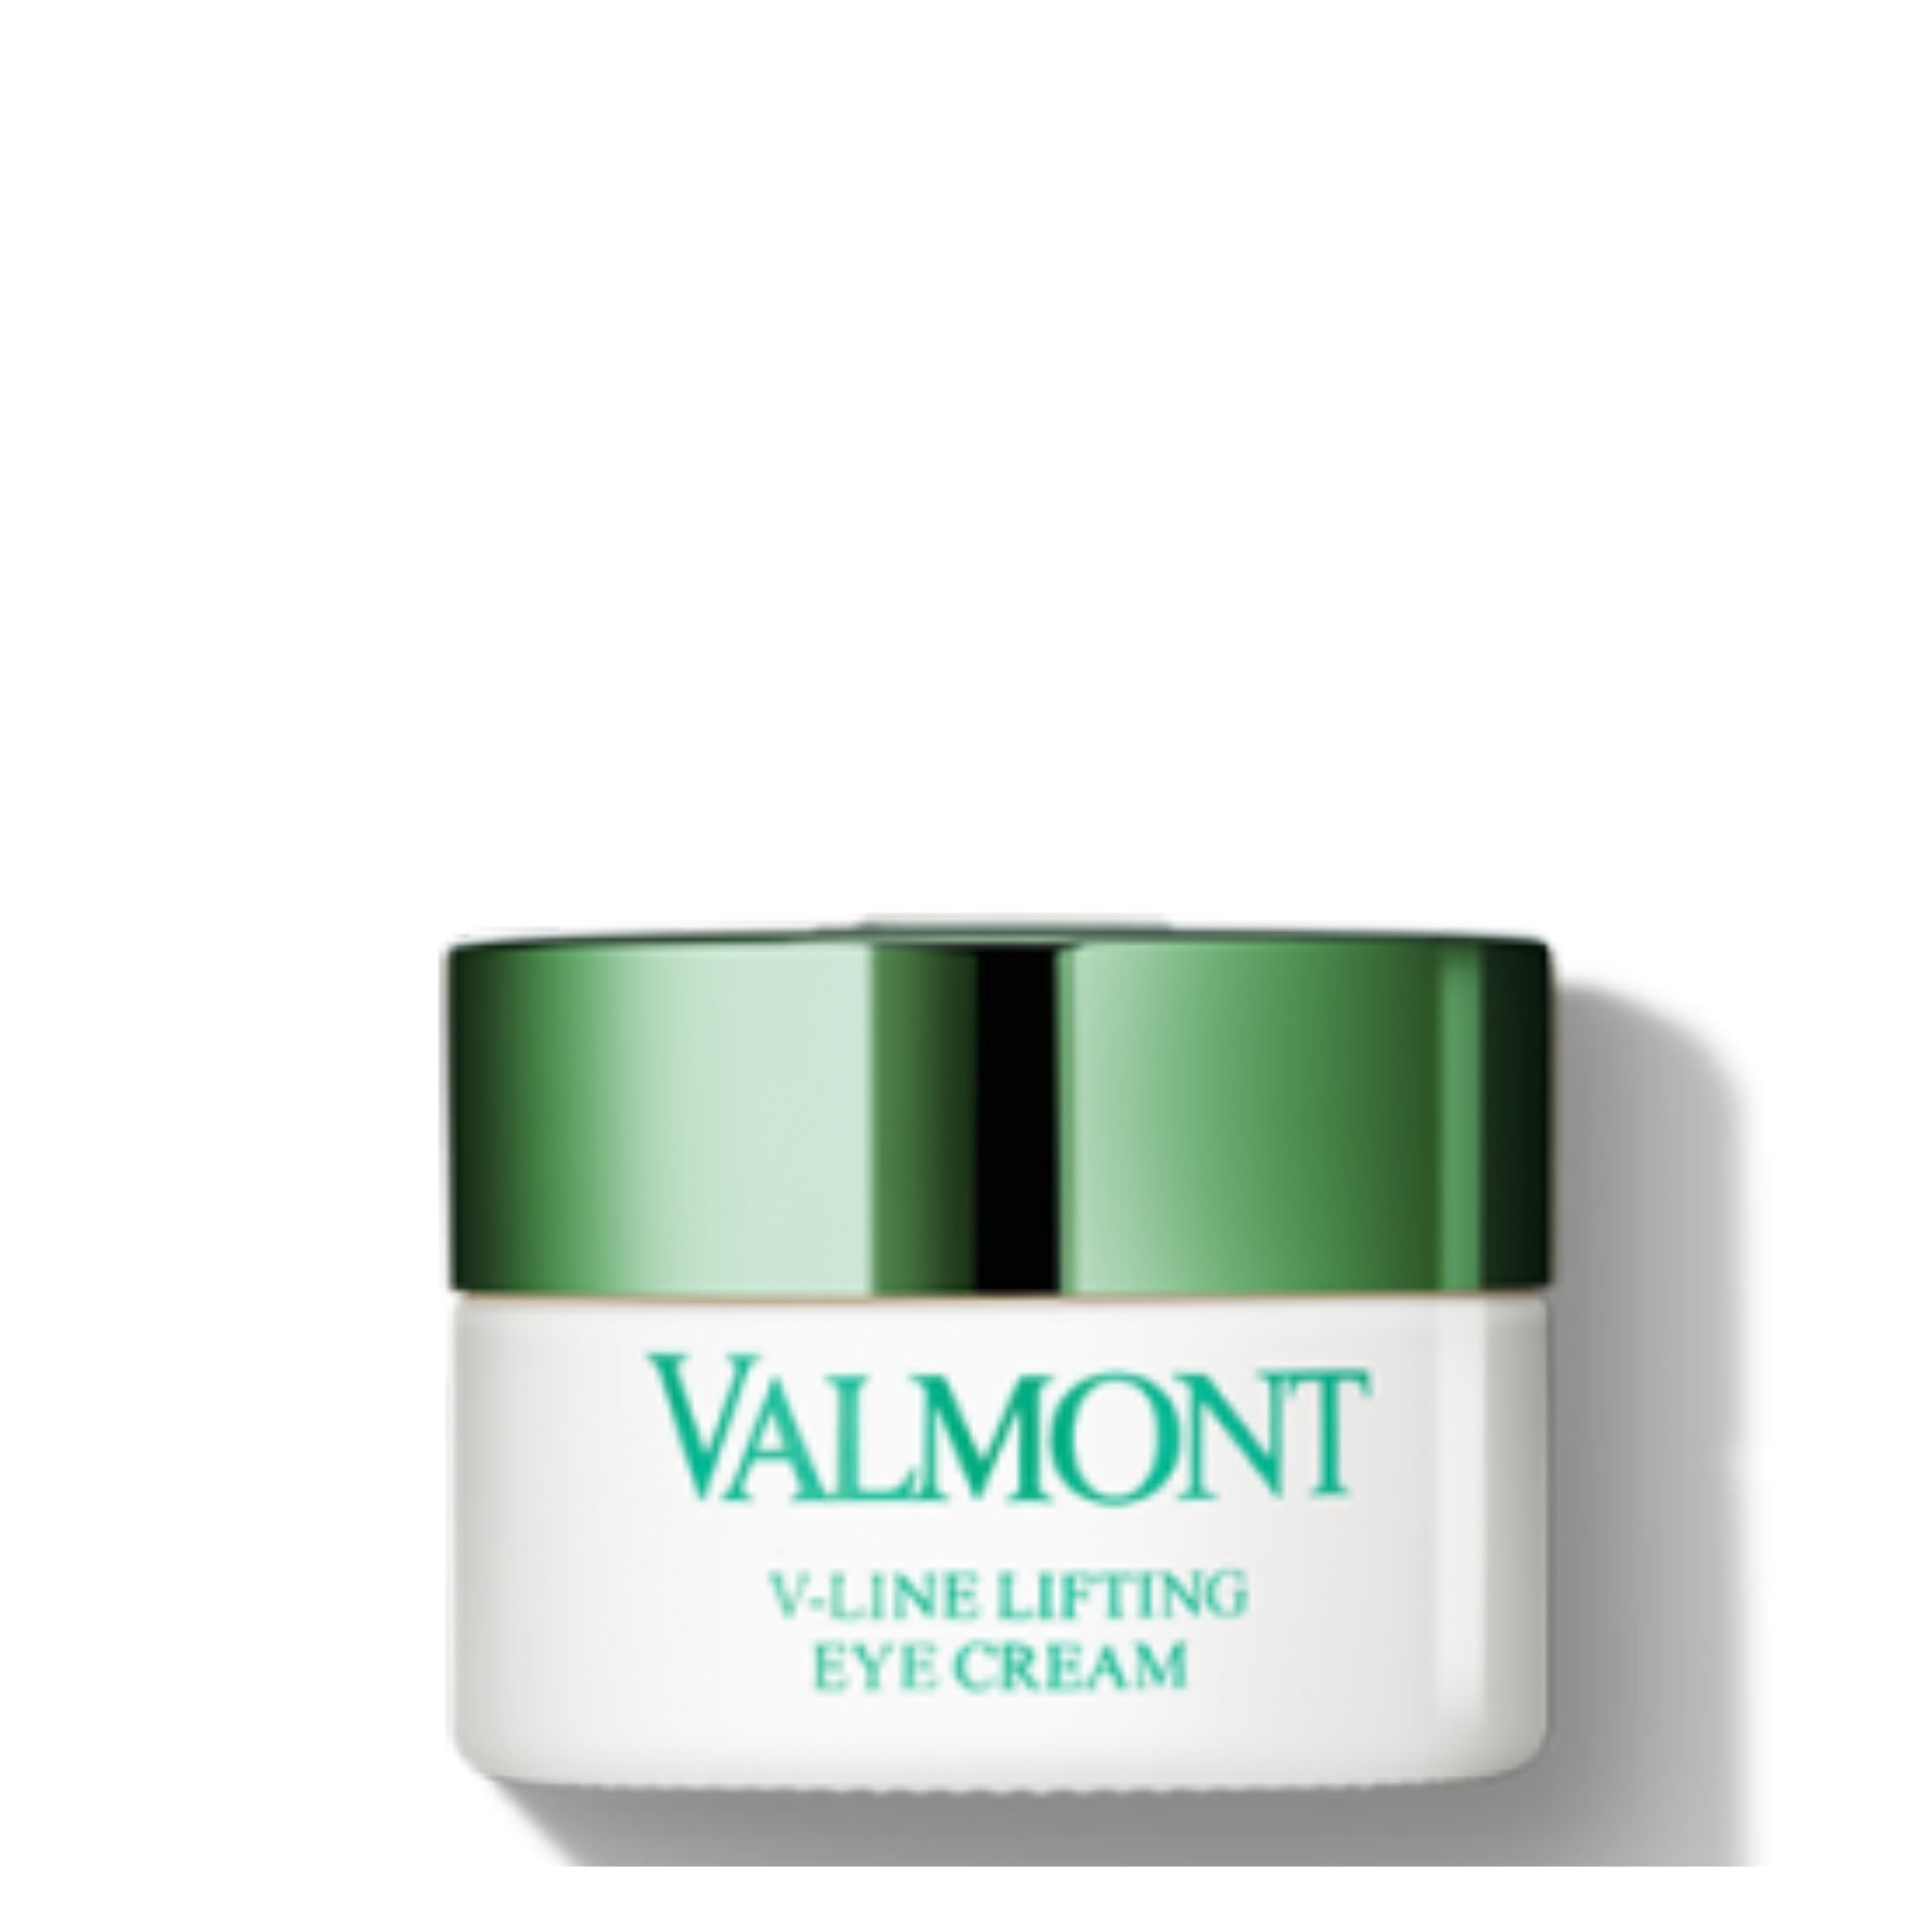 valmont V-Line Lifting Eye Cream